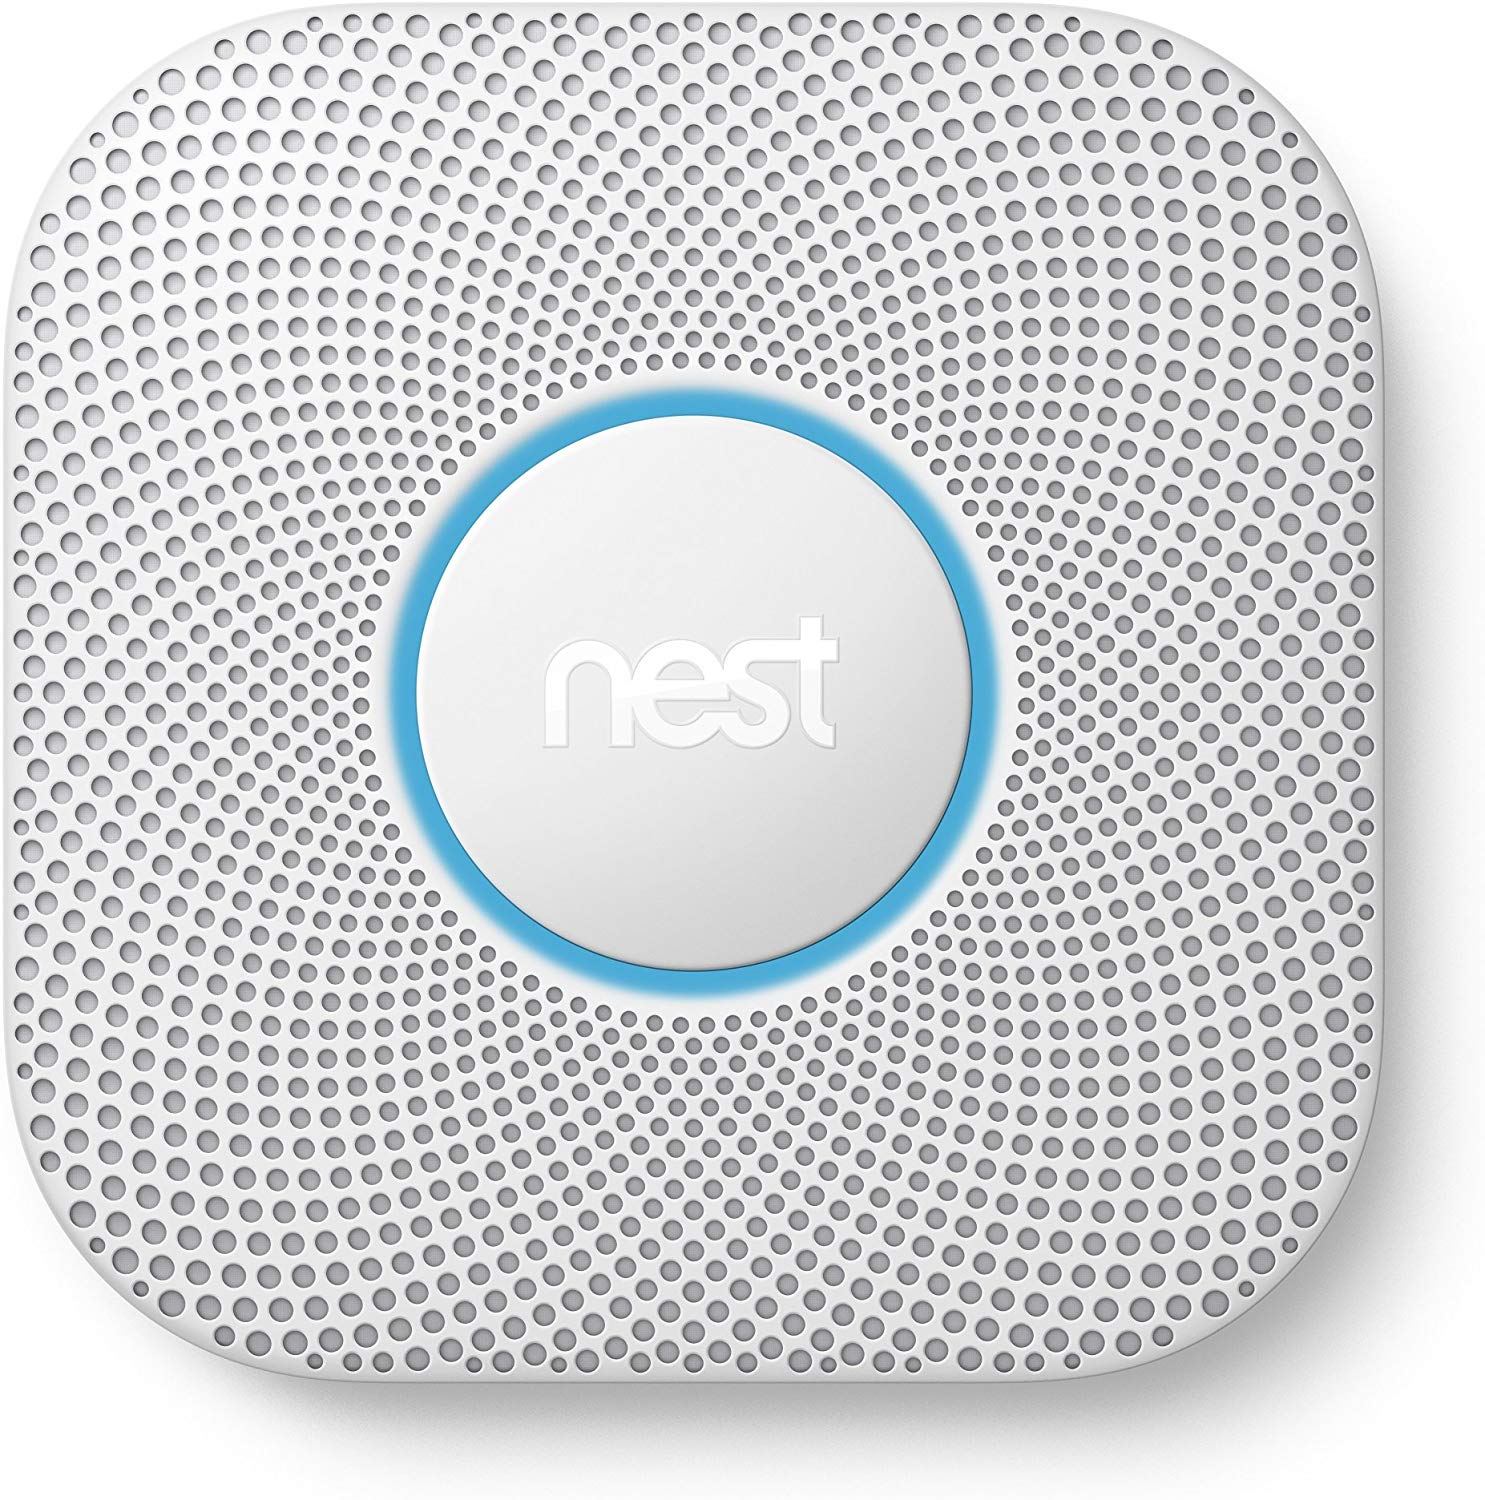 Detector de humo + CO de Nest solo 100,8€